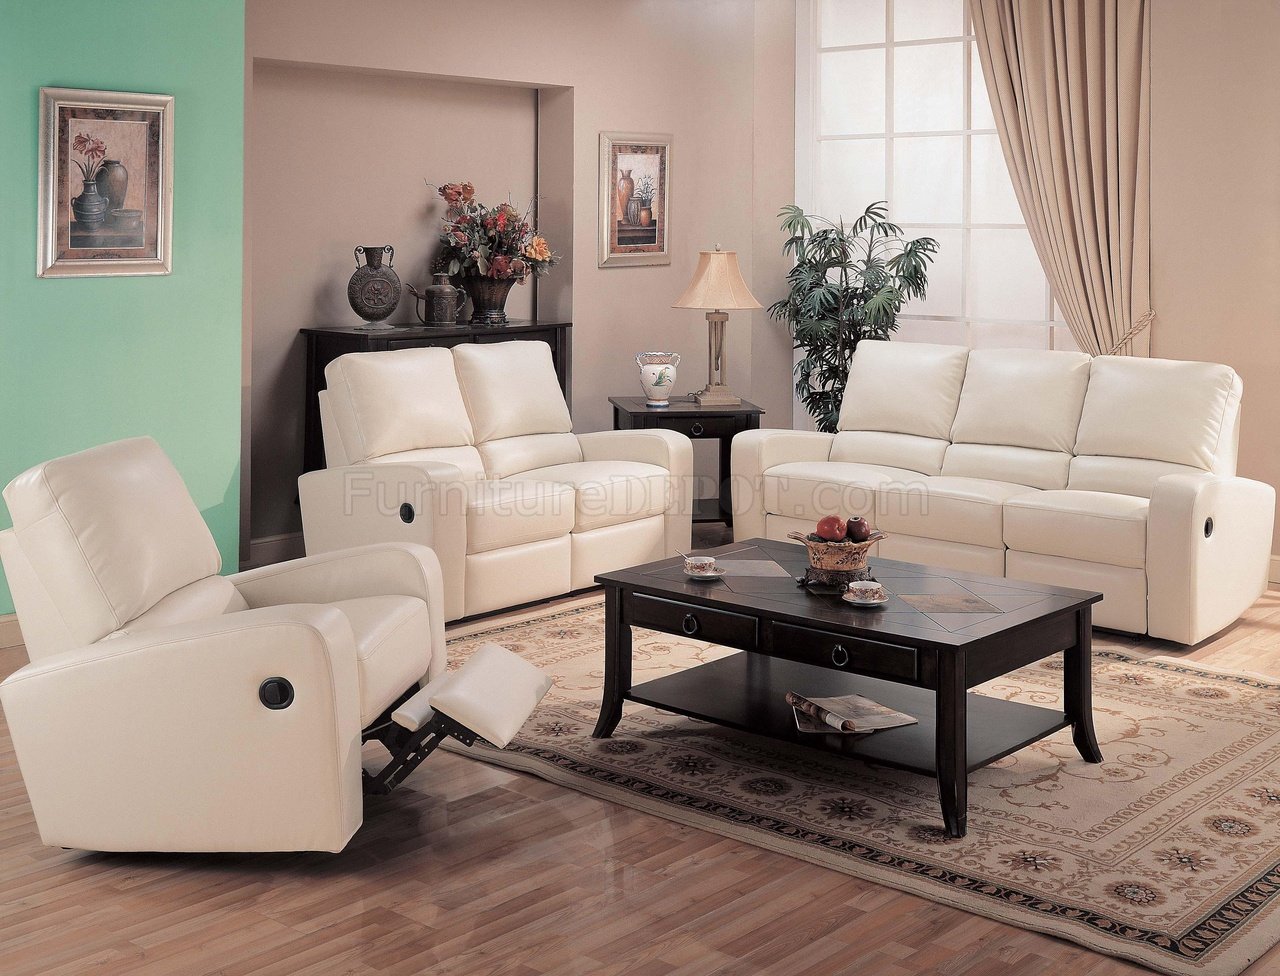 Cream Reclining Sofas Modern Living Room Design